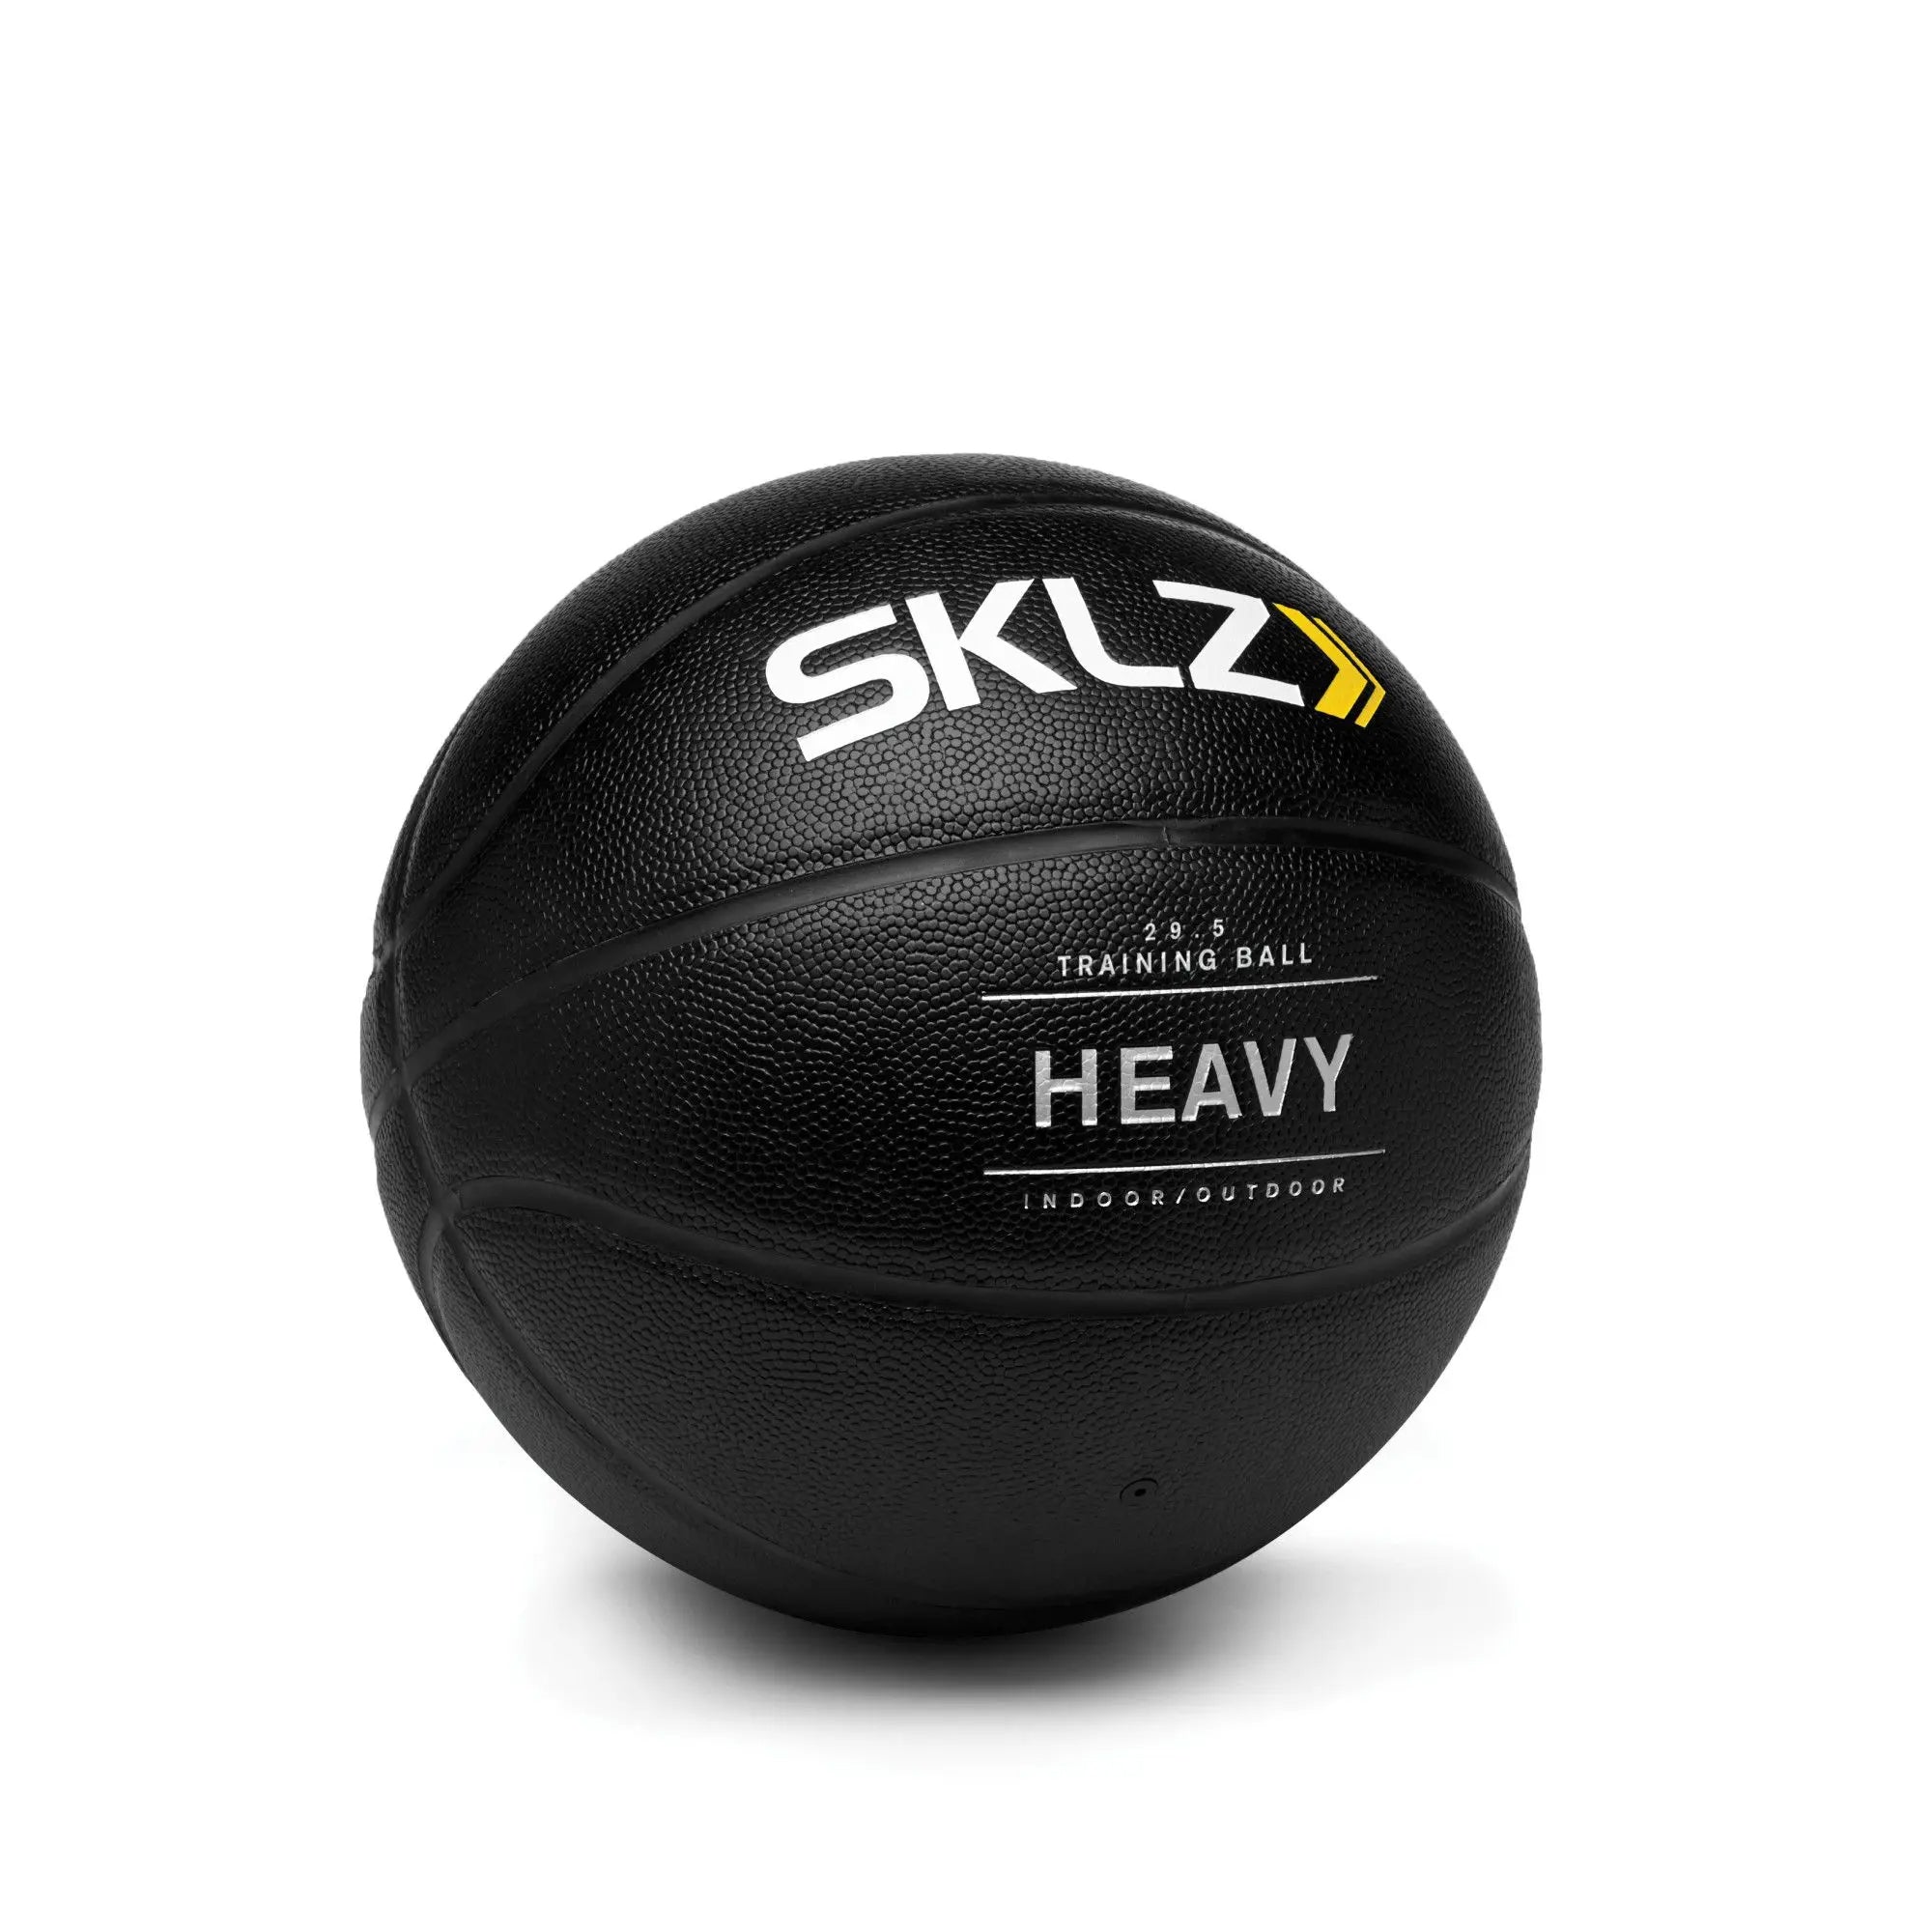 Sklz Heavy Weight Control Basketball (2736)